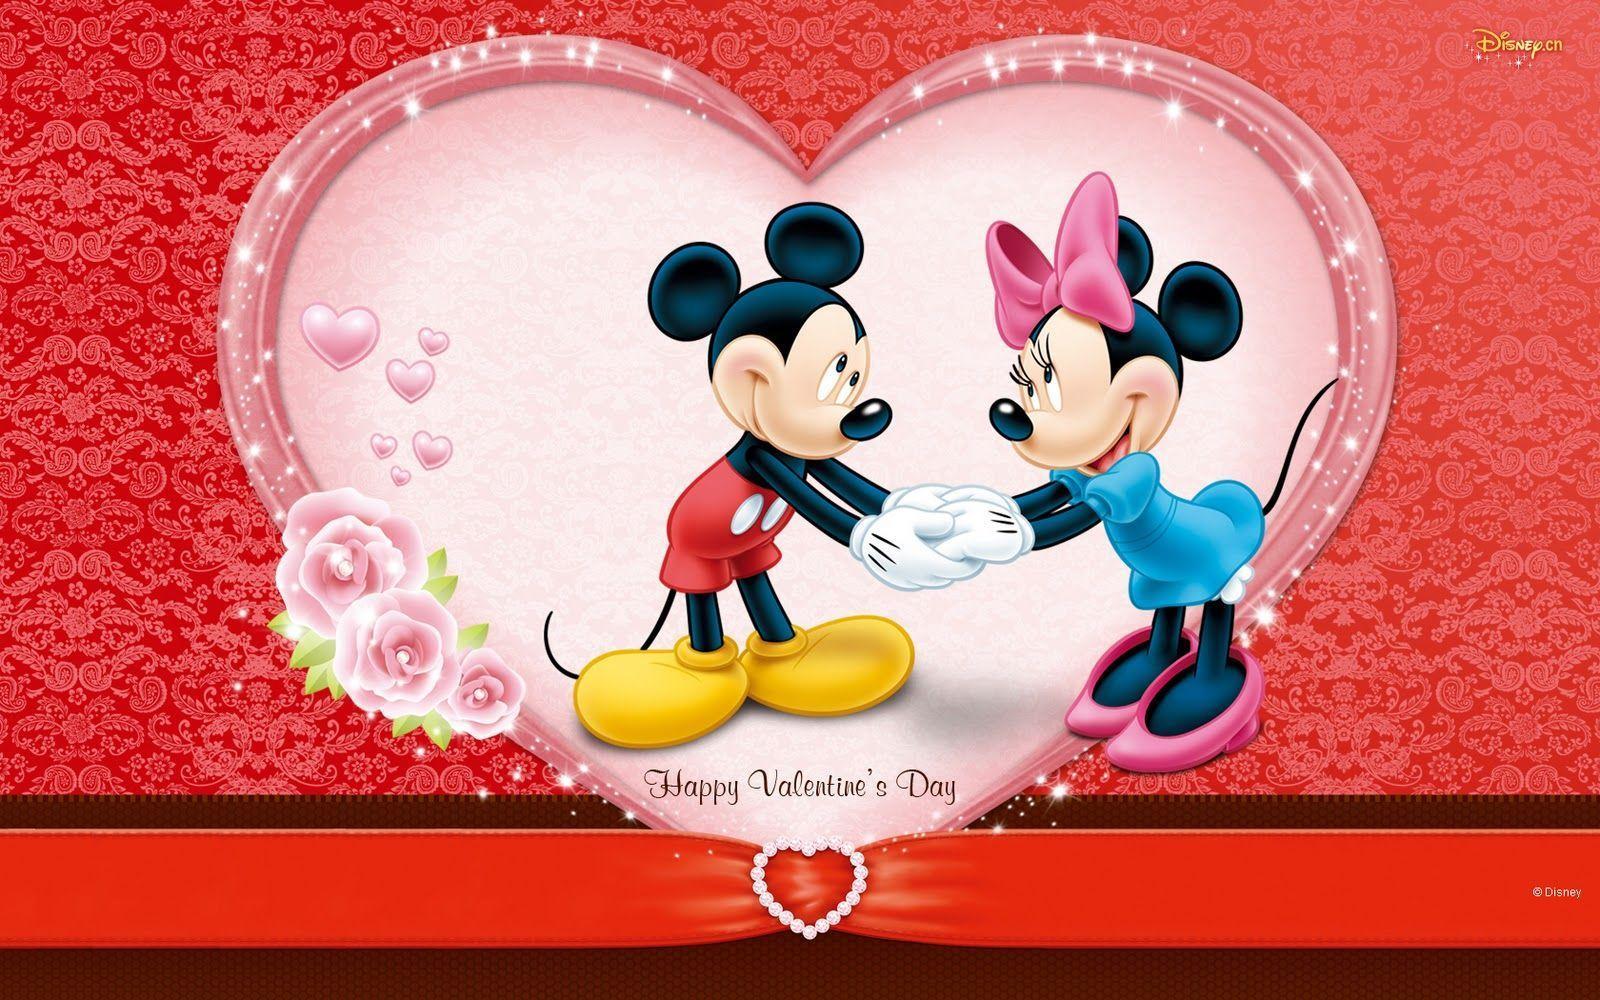 Valentines Day 2014 at Disneyland HD Wallpaper For Desktop